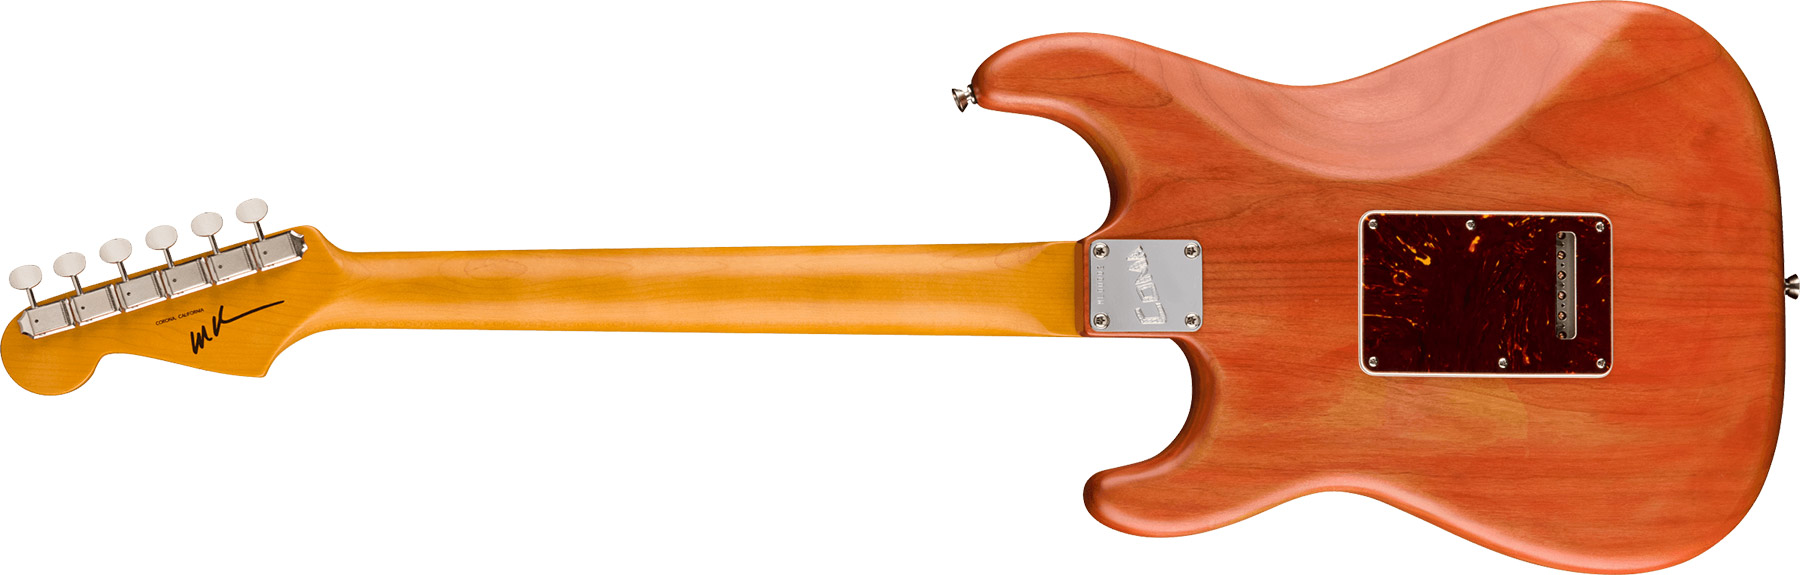 Fender Michael Landau Strat Coma Stories Usa Signature Hss Trem Rw - Coma Red - Str shape electric guitar - Variation 1